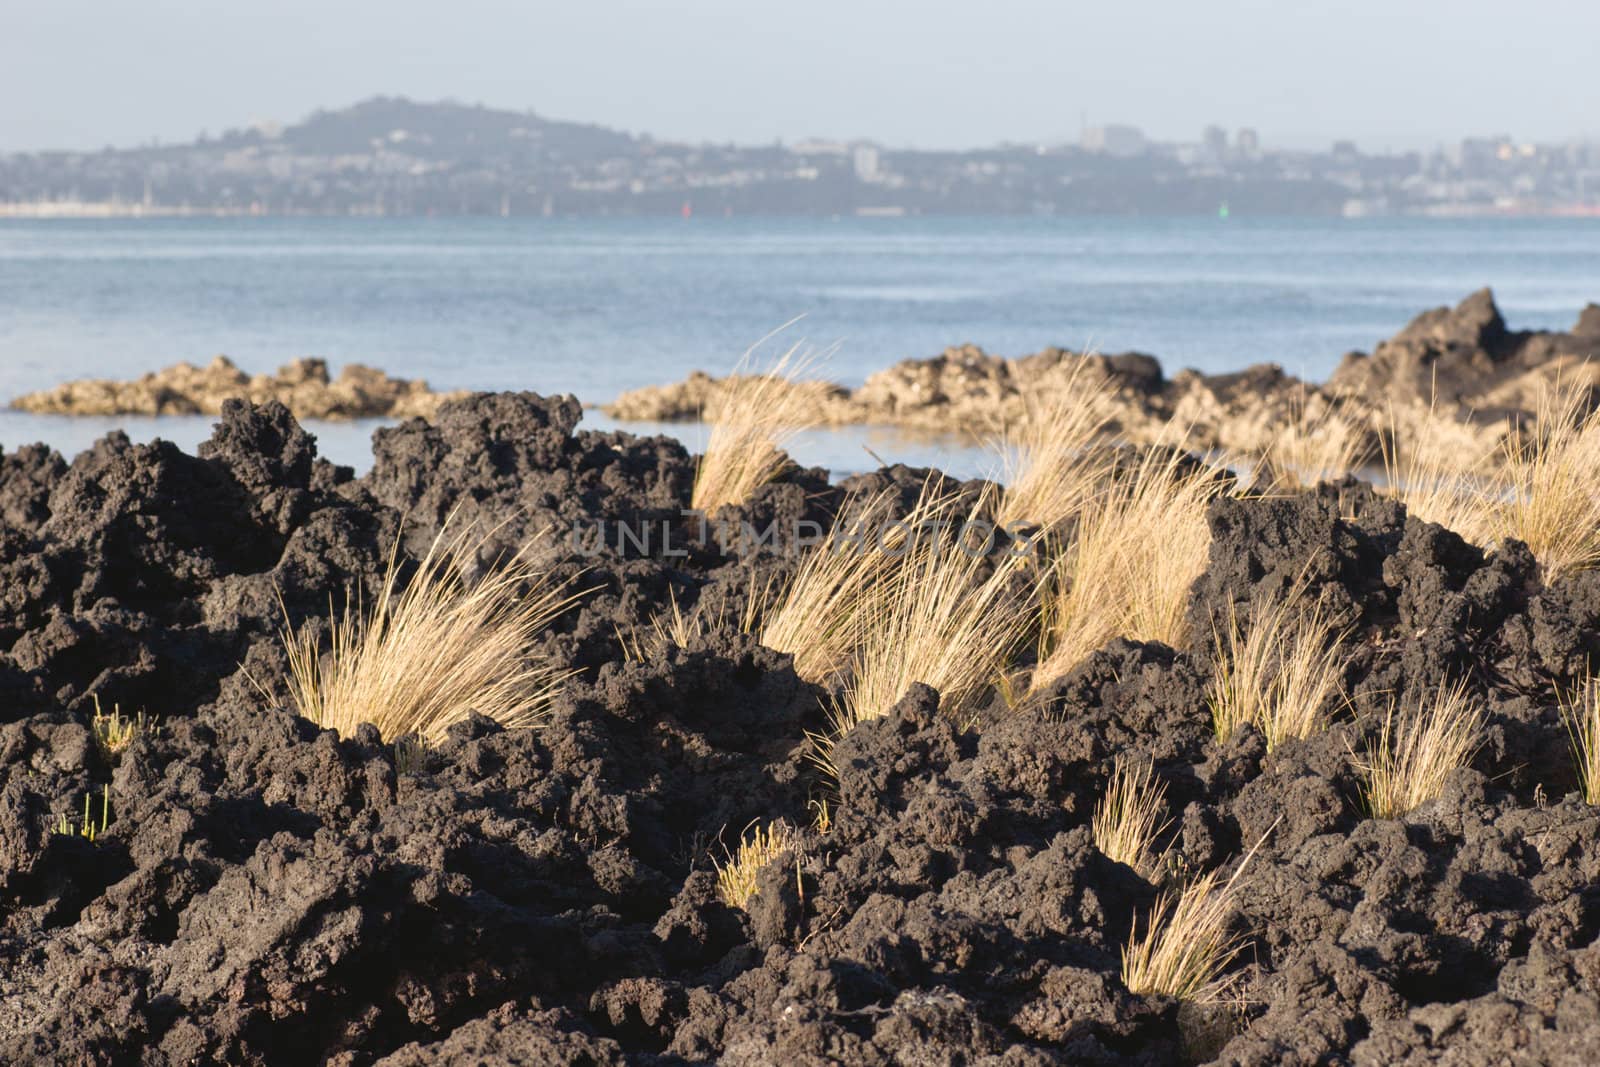 Tussock grass breaks through hardened lava rock on Rangitoto Island, Hauraki Gulf, New Zealand. Auckland City lays in the background.